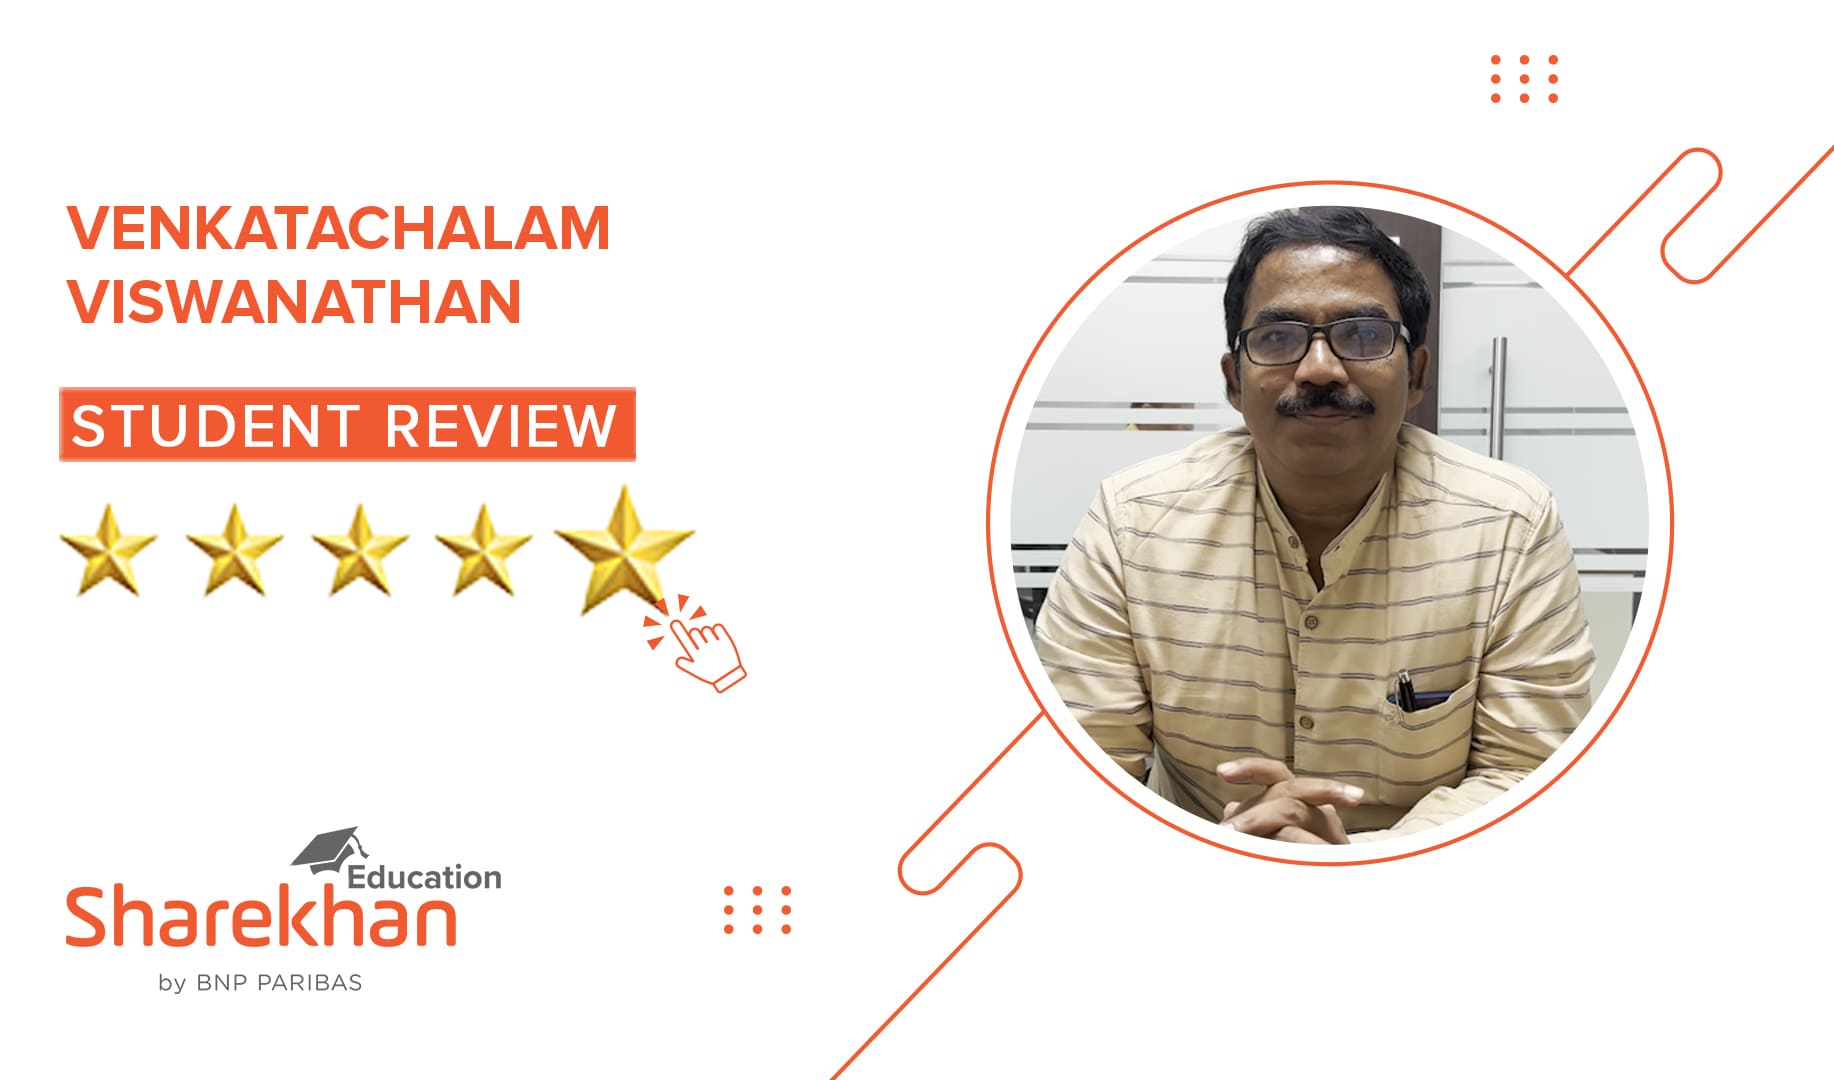 Sharekhan Education Review by Venkatachalam Viswanathan